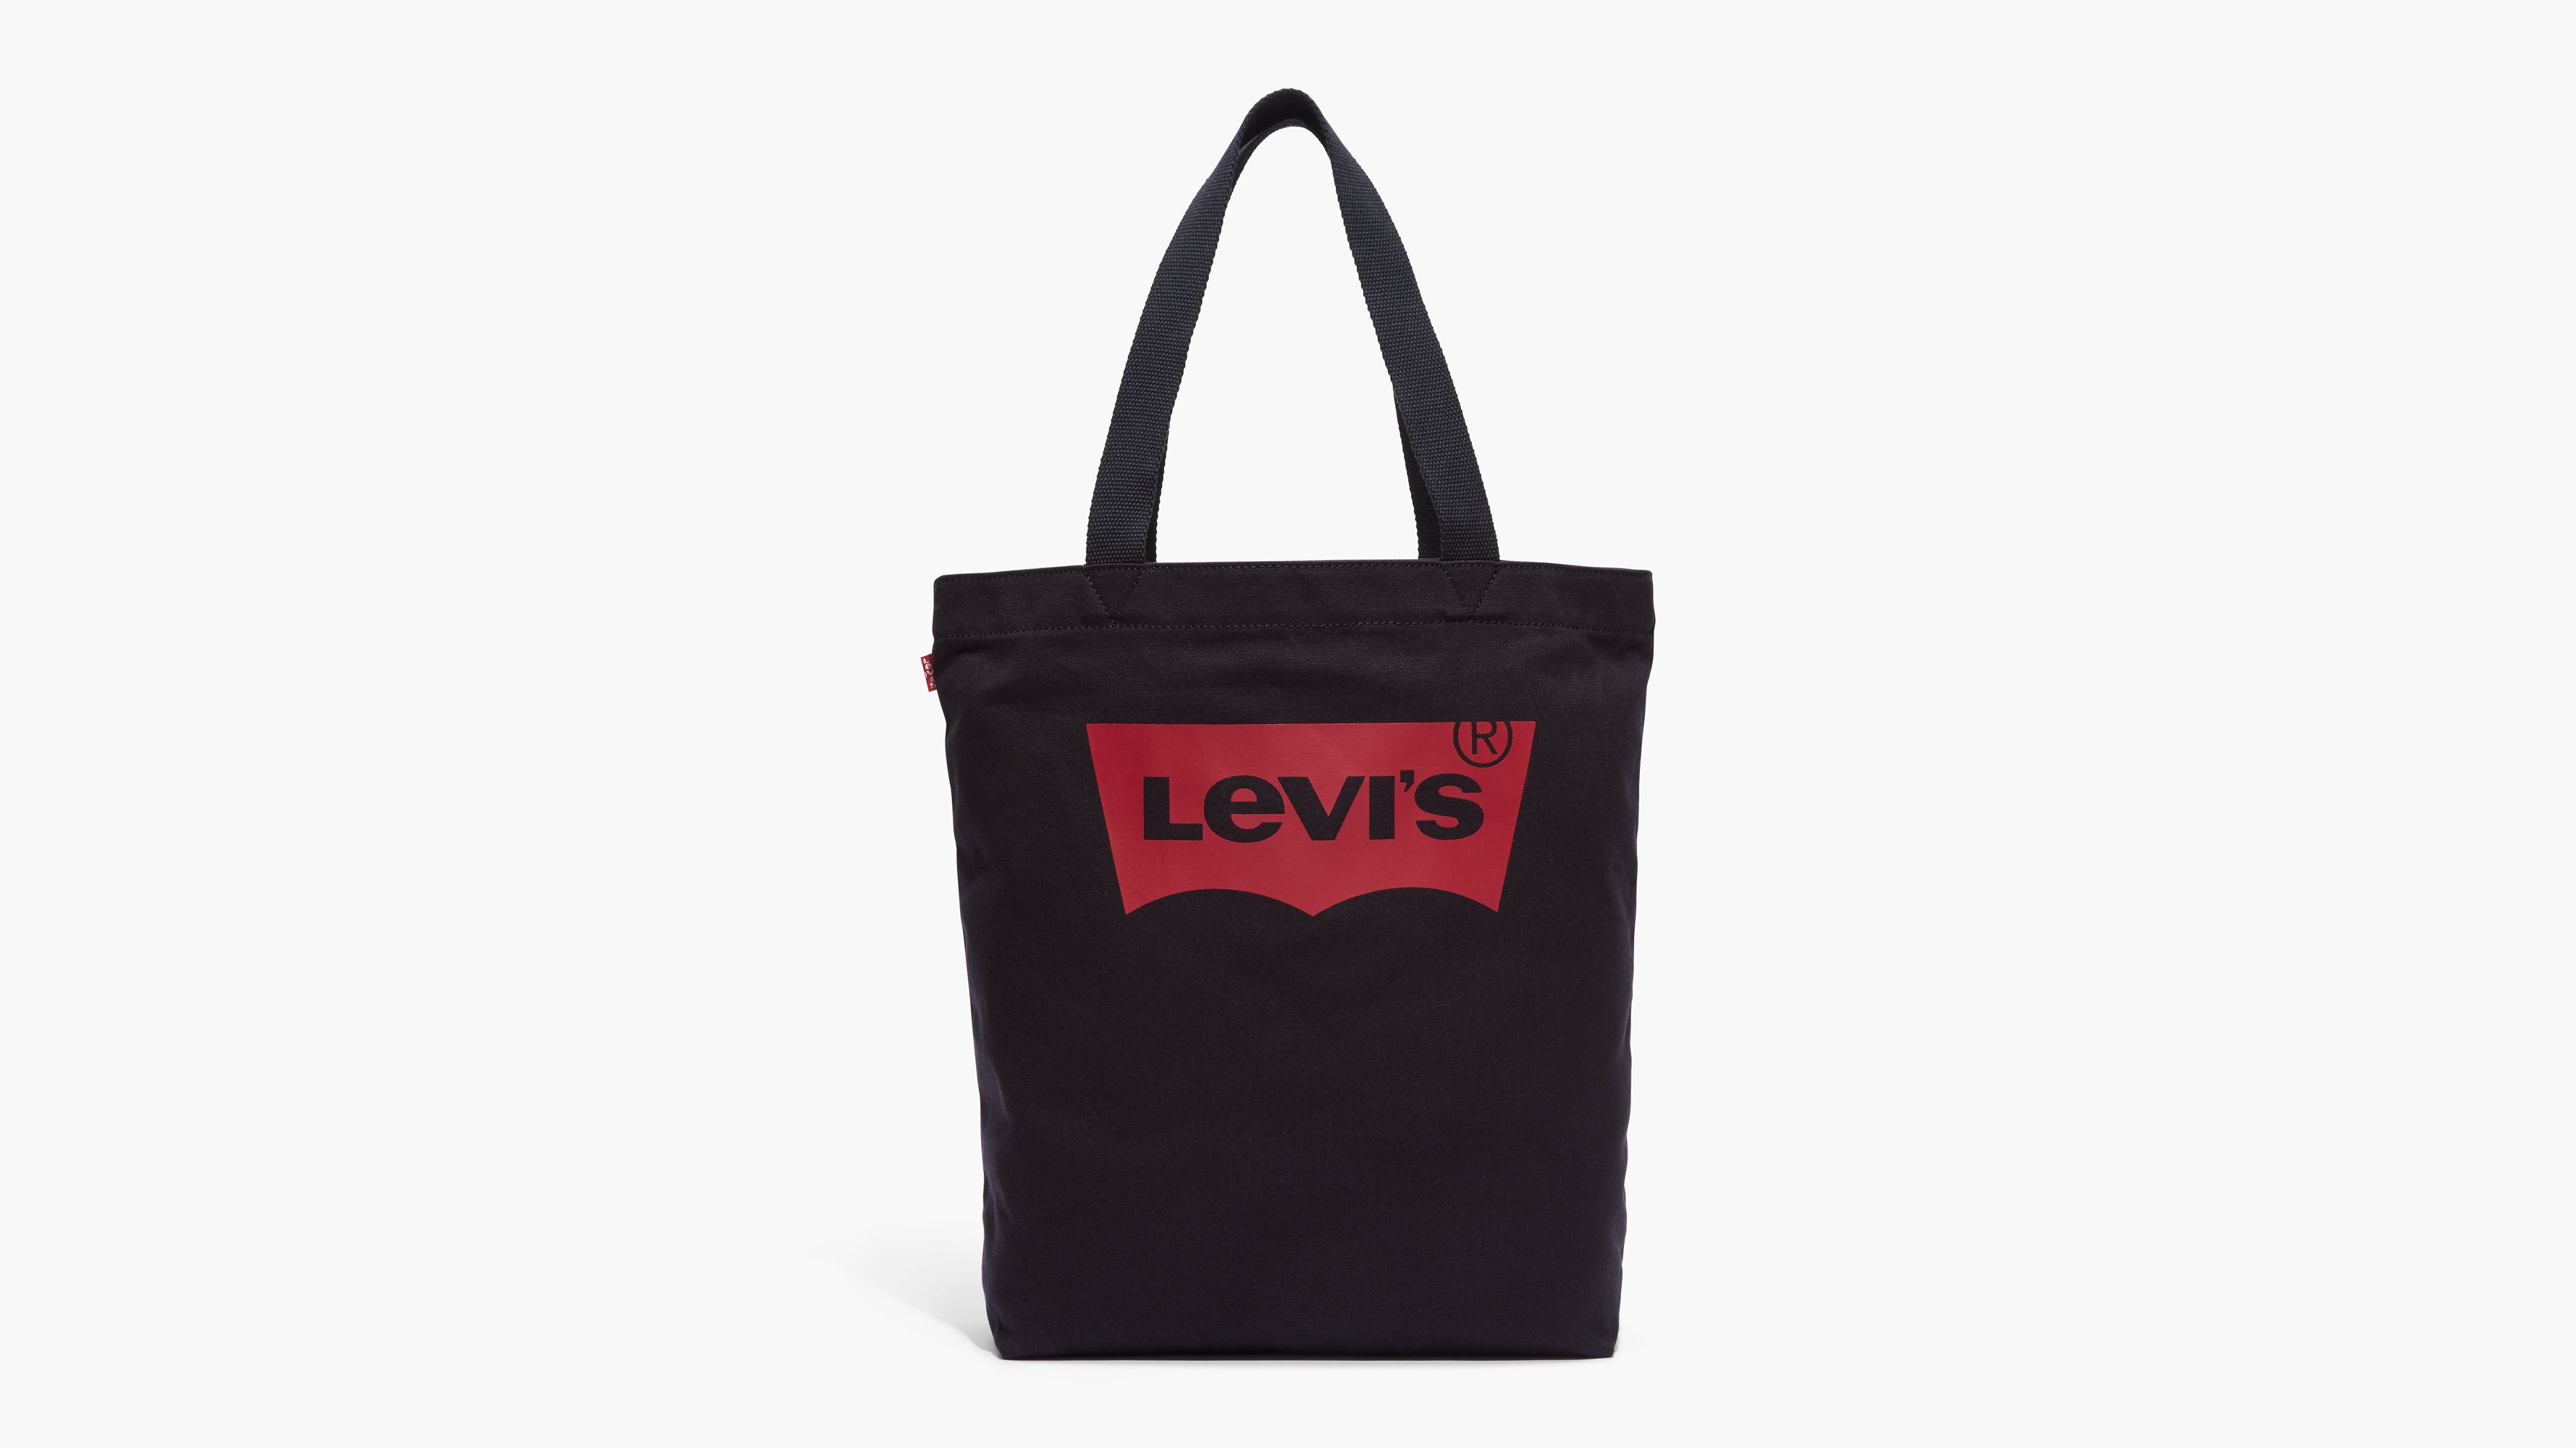 levi's eleven shirt